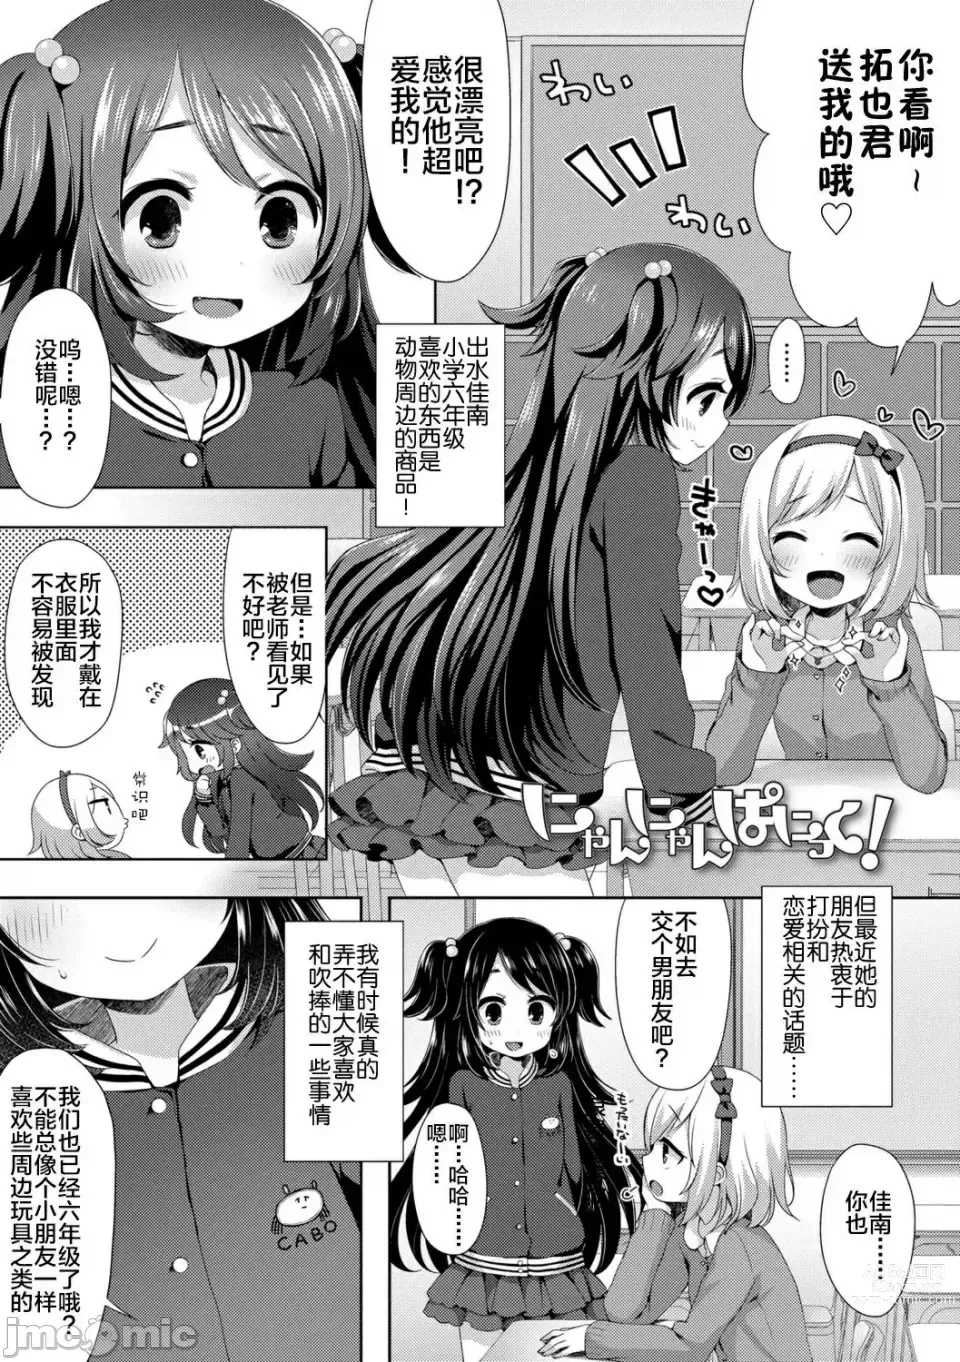 Page 4 of manga 喵喵驚喜!